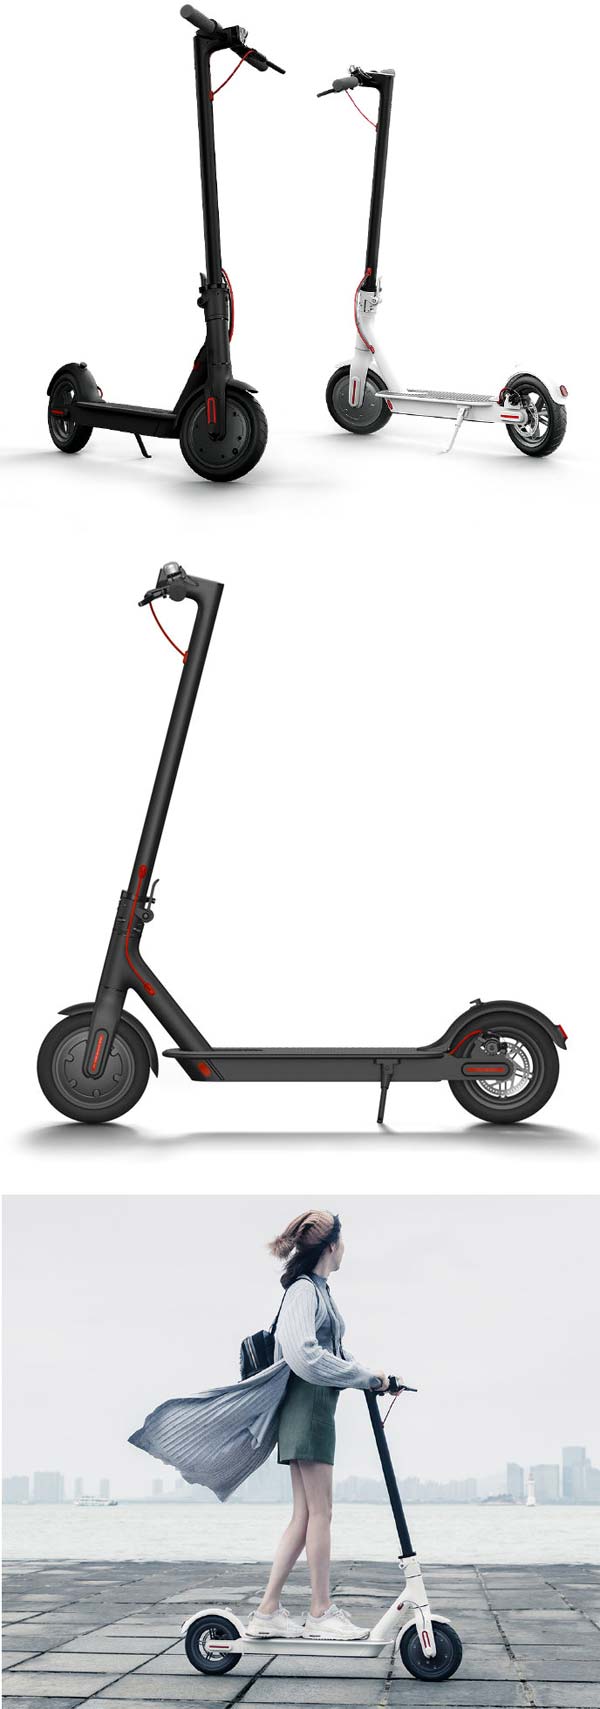 Xiaomi Mi electric scooter